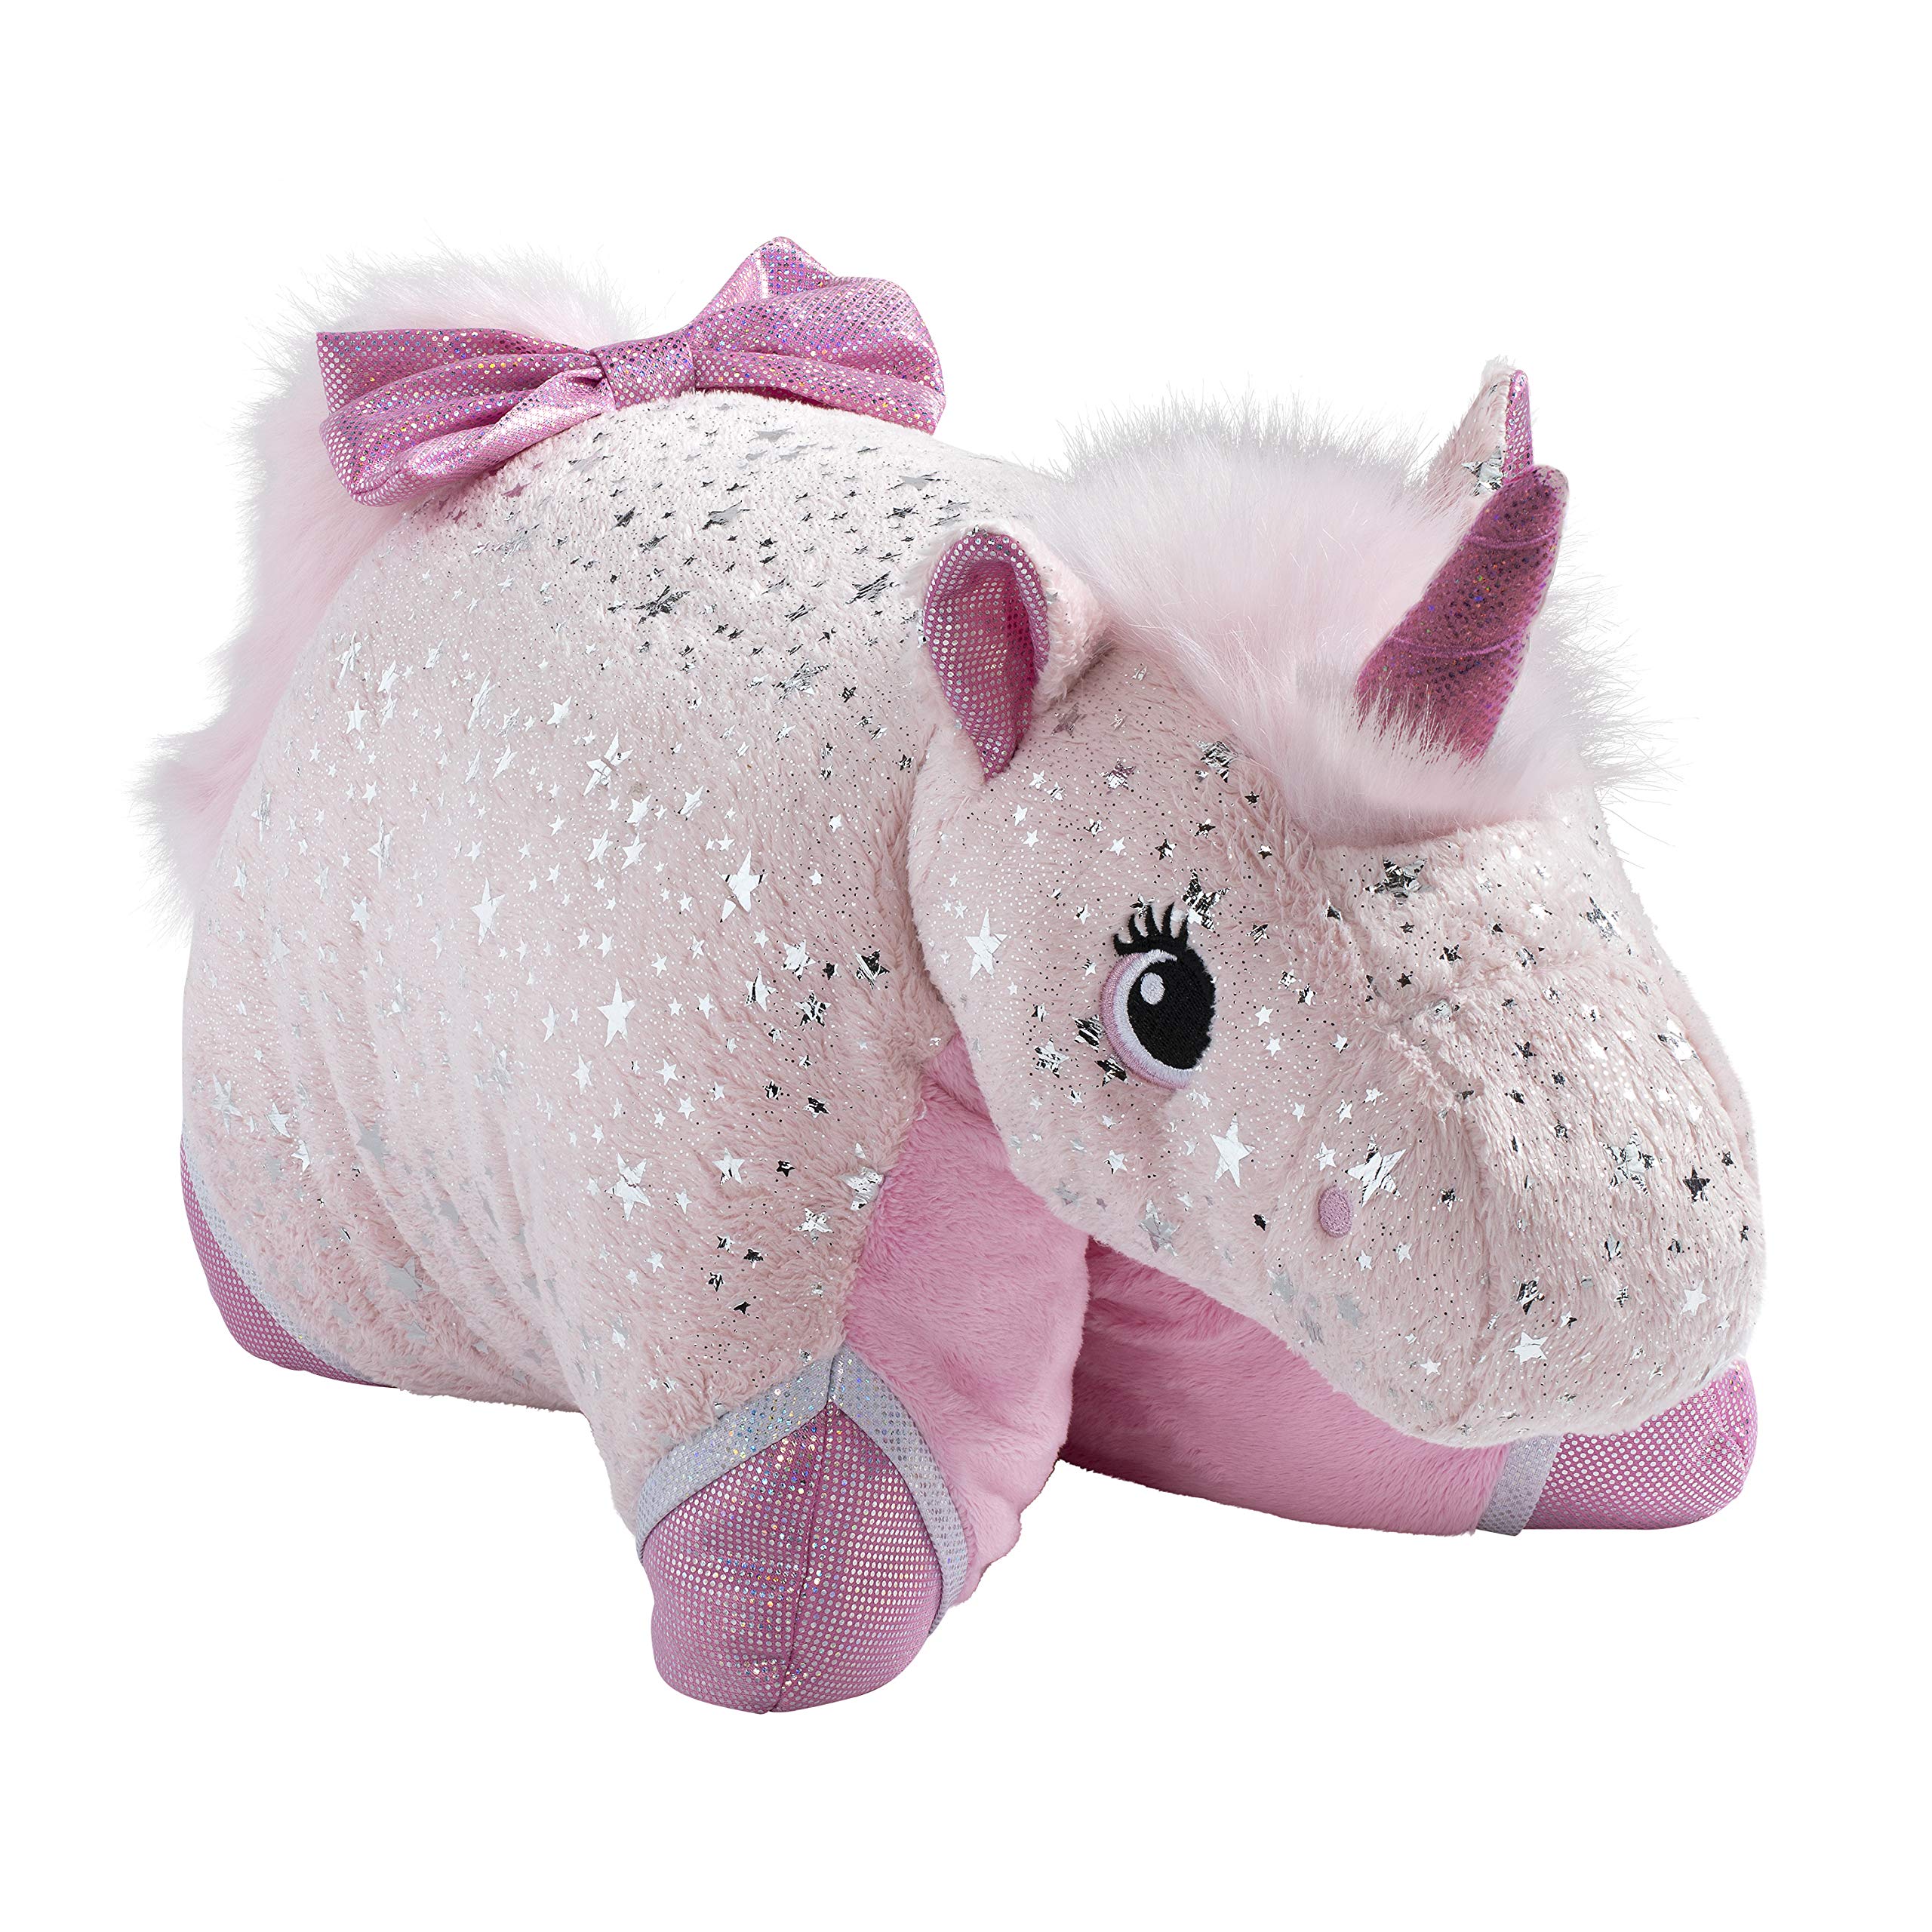 Pillow Pets Originals Sparkly Pink Unicorn Stuffed Animal Plush Toy